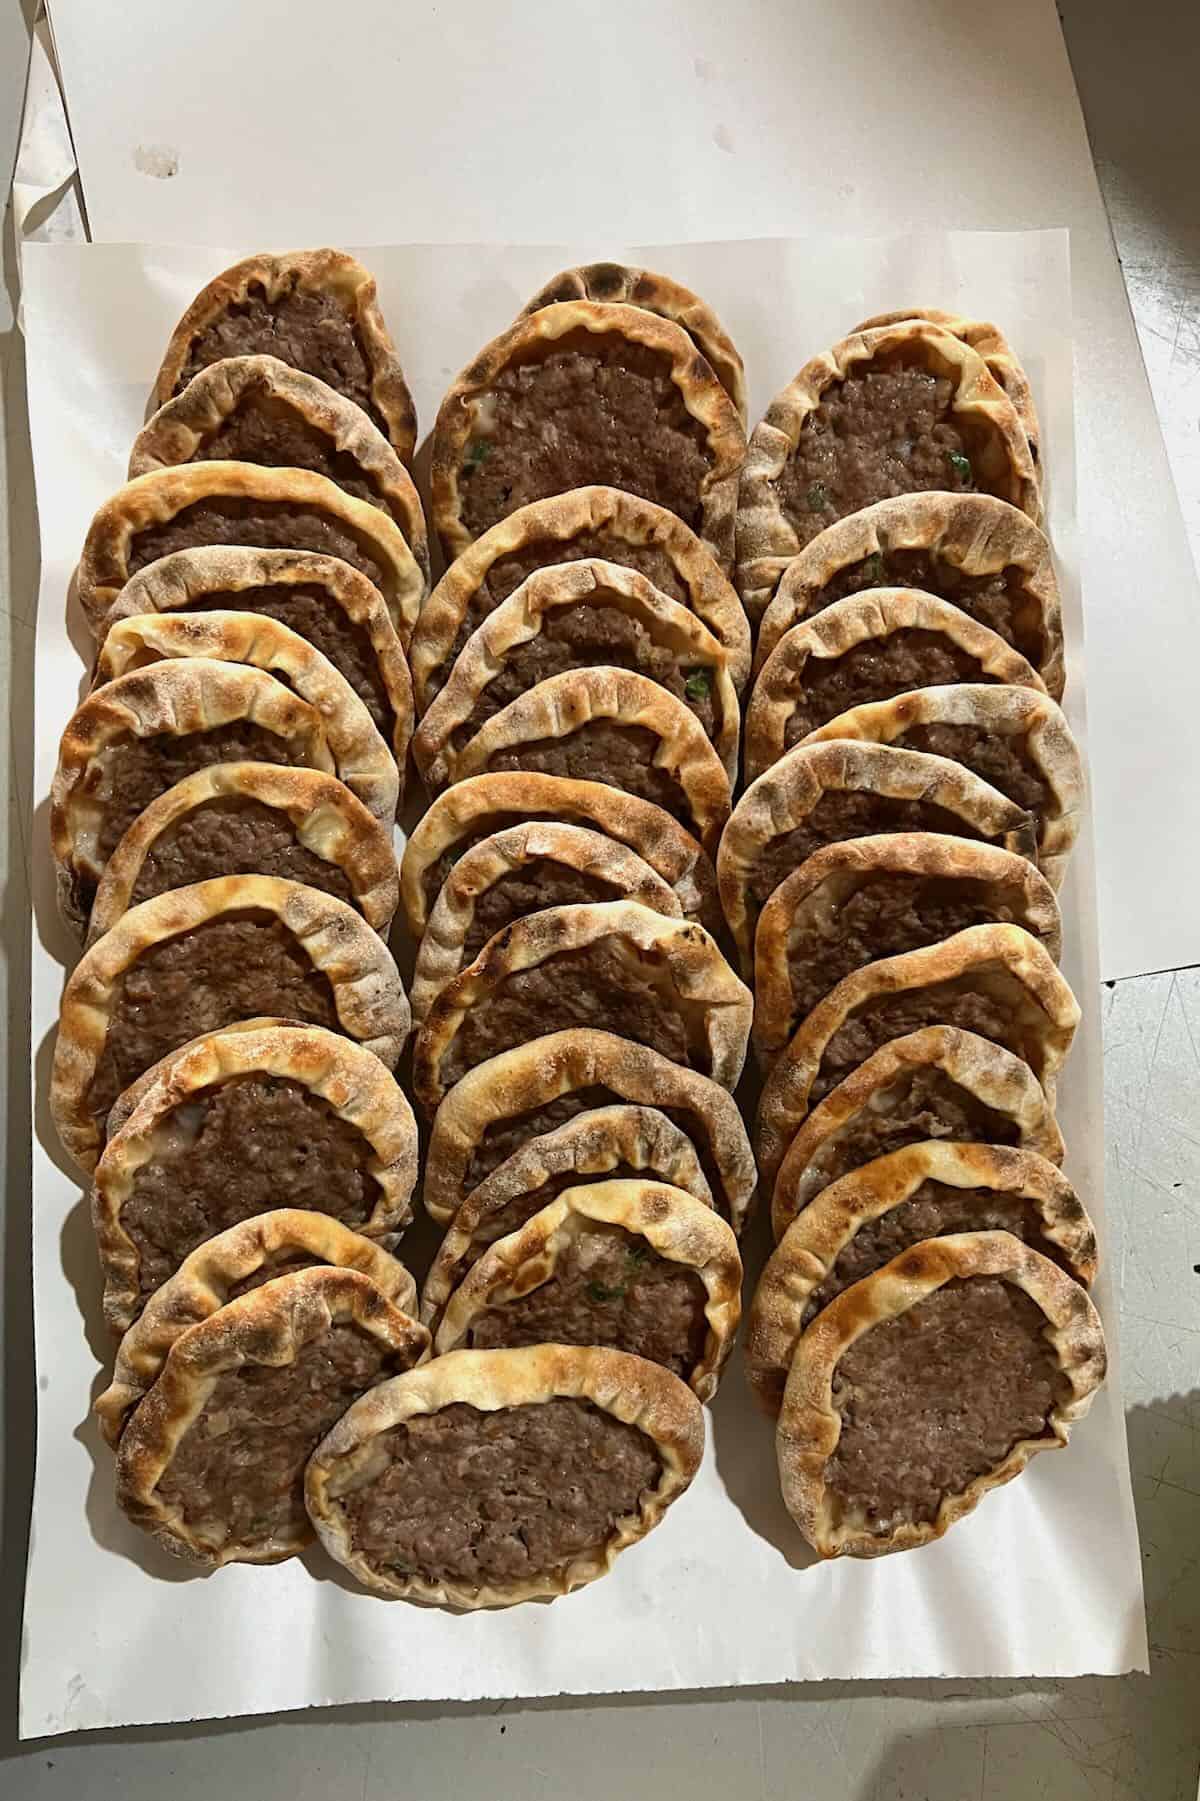 Three dozens of sfiha meat pies